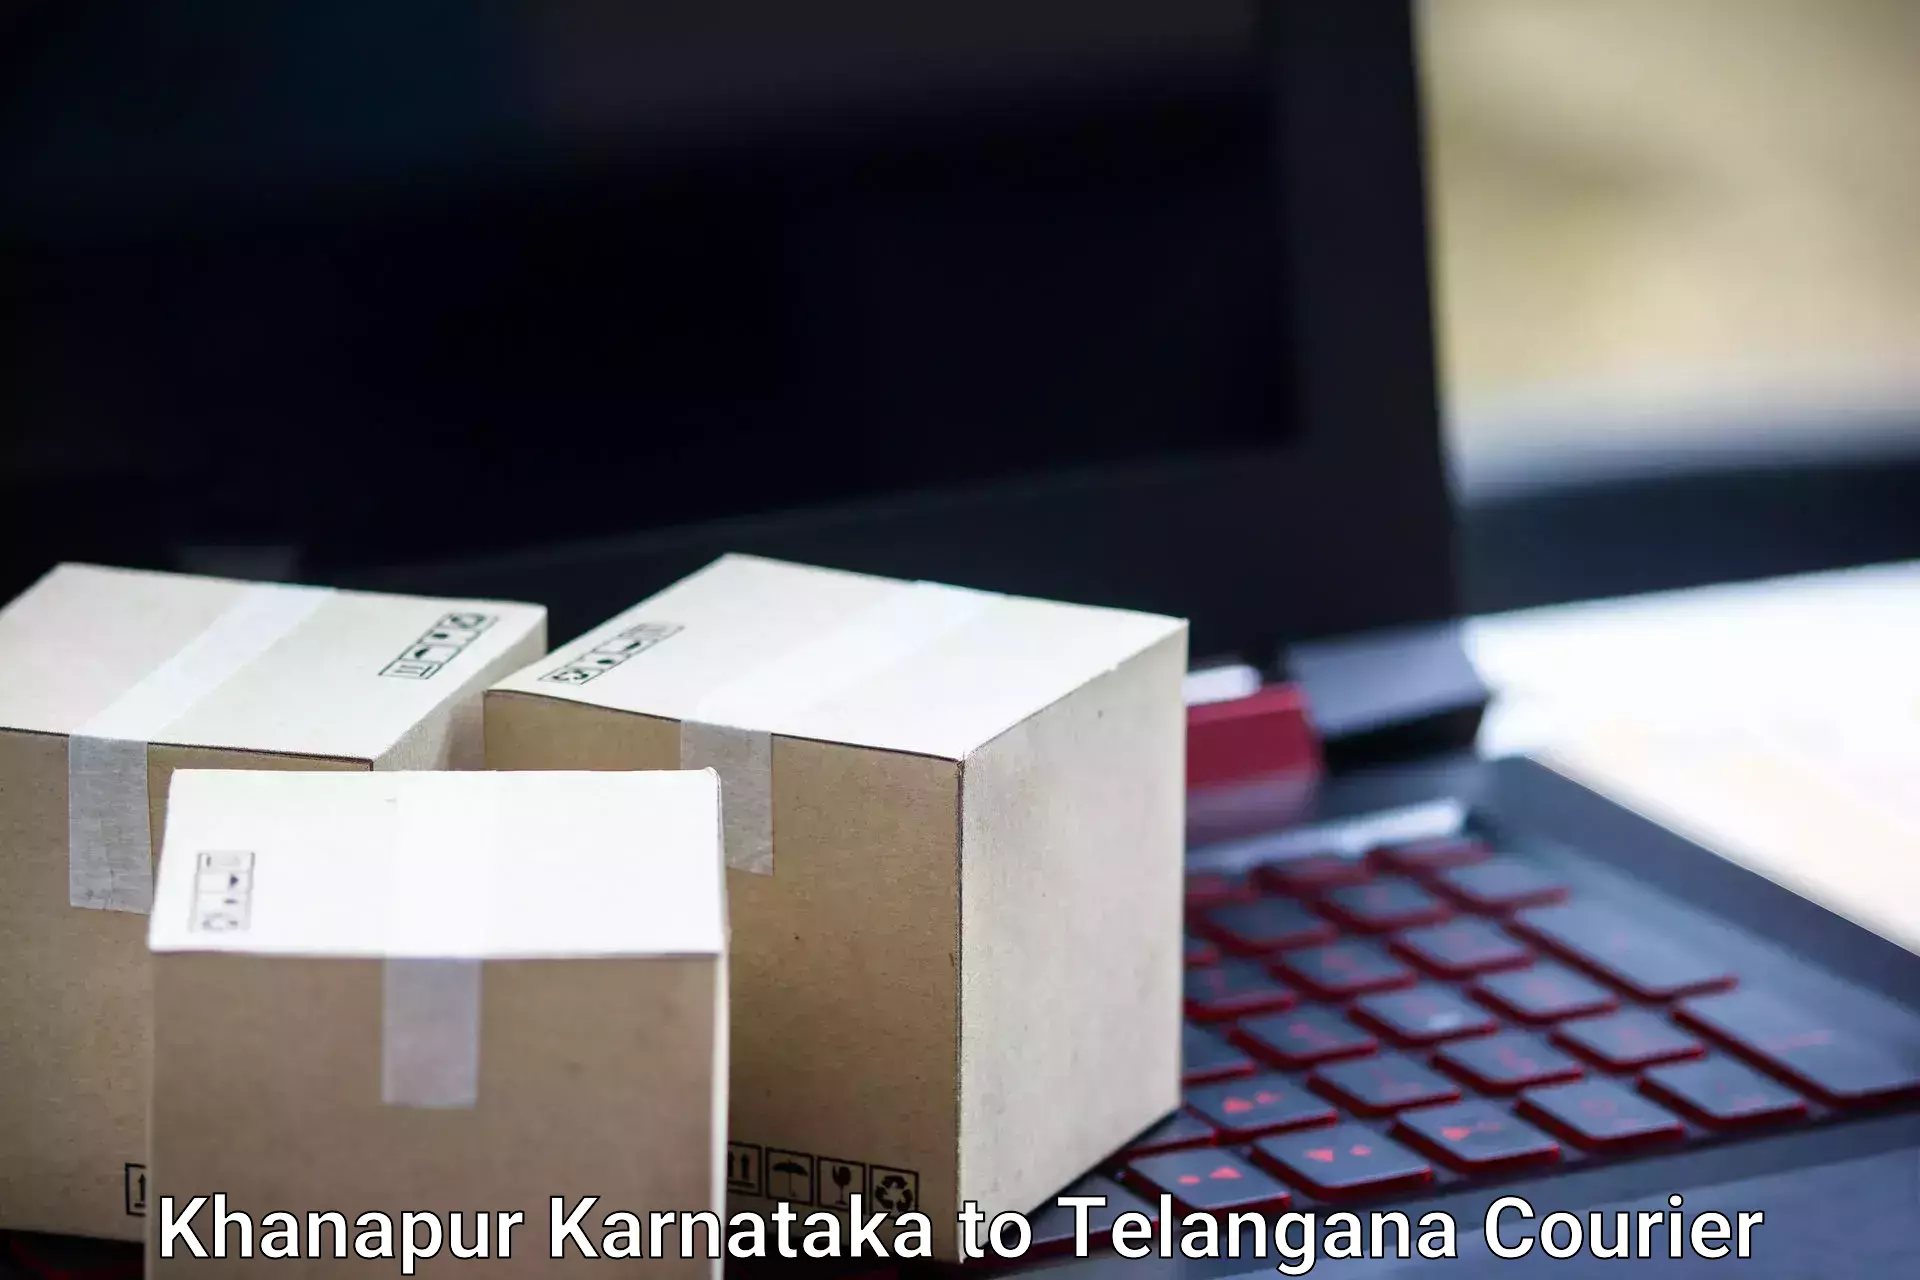 Baggage relocation service Khanapur Karnataka to Mominpet